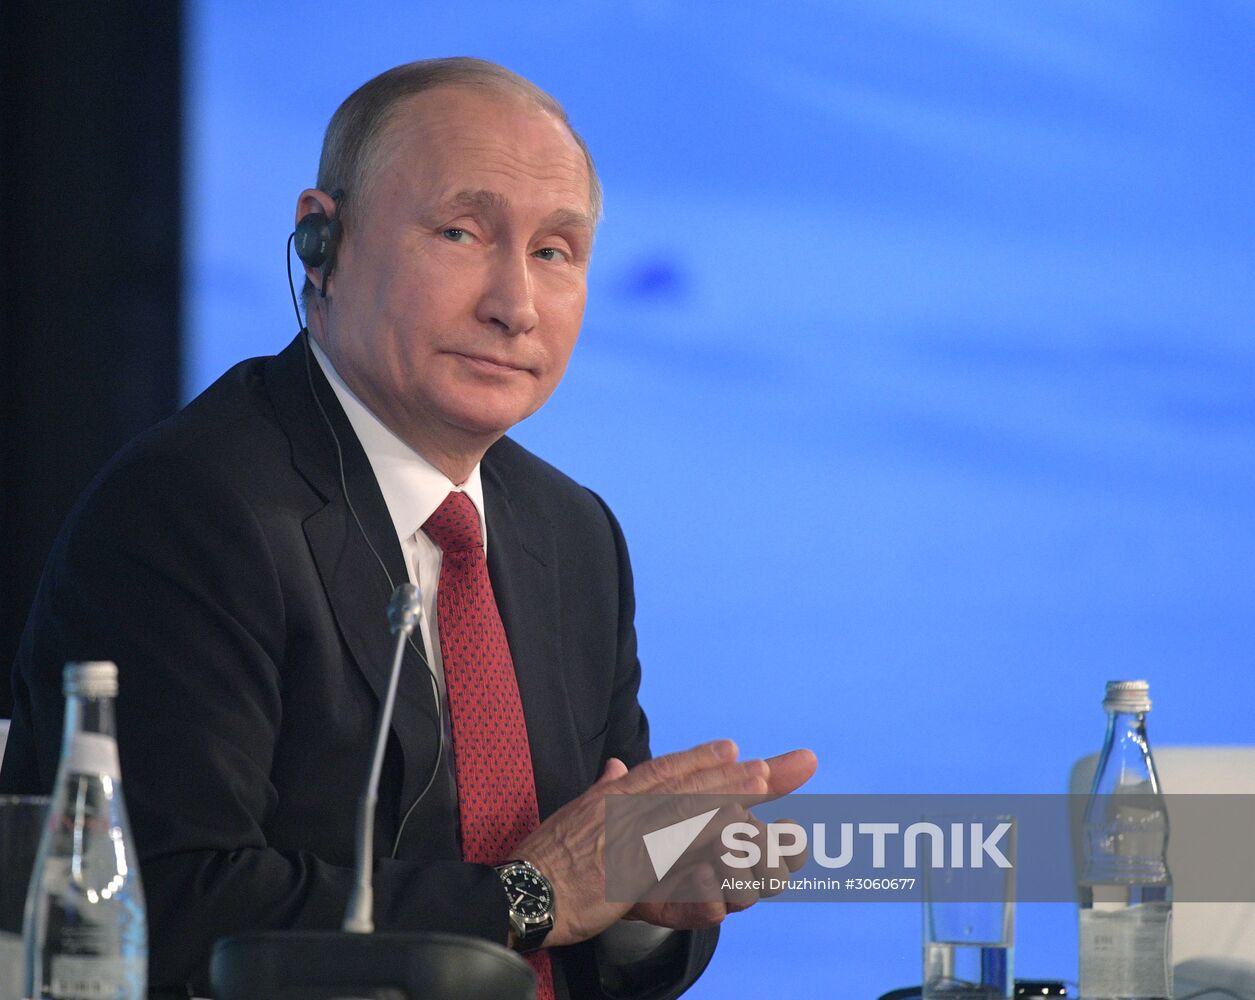 Russian President Vladimir Putin visits The Arctic: Territory of Dialogue international forum